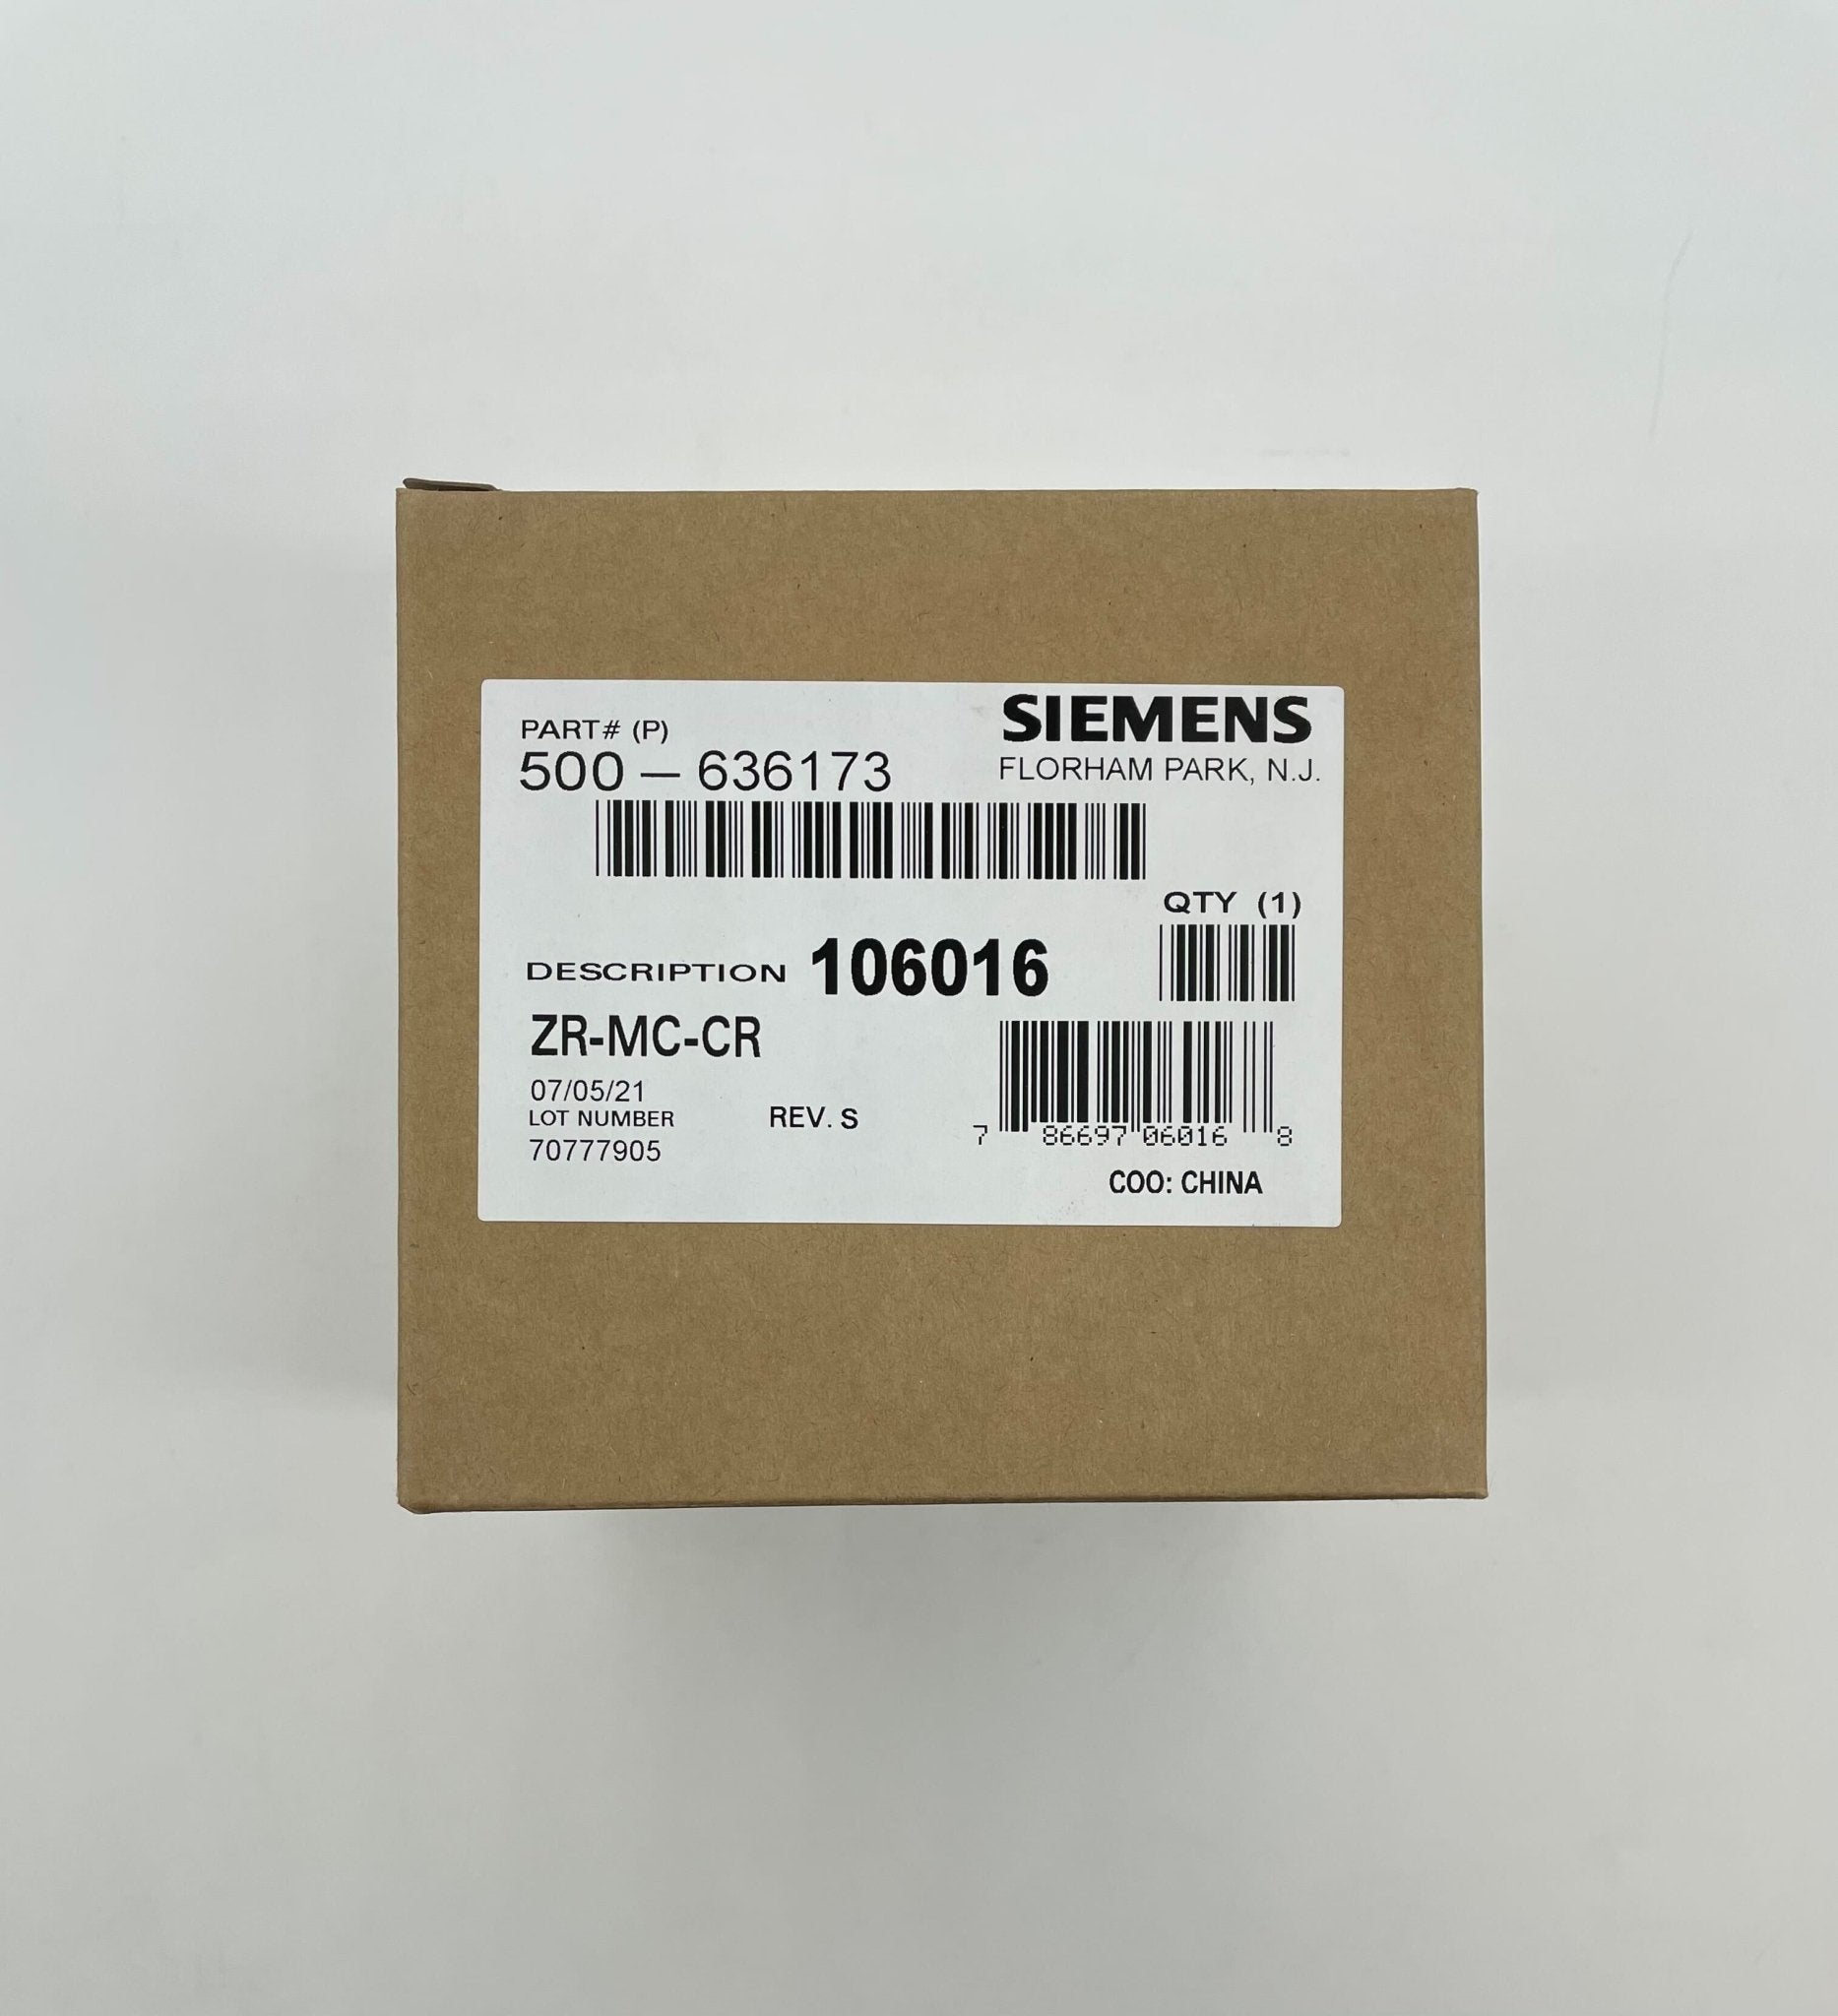 Siemens ZR-MC-CR Multi-Candela Strobe Ceiling - The Fire Alarm Supplier